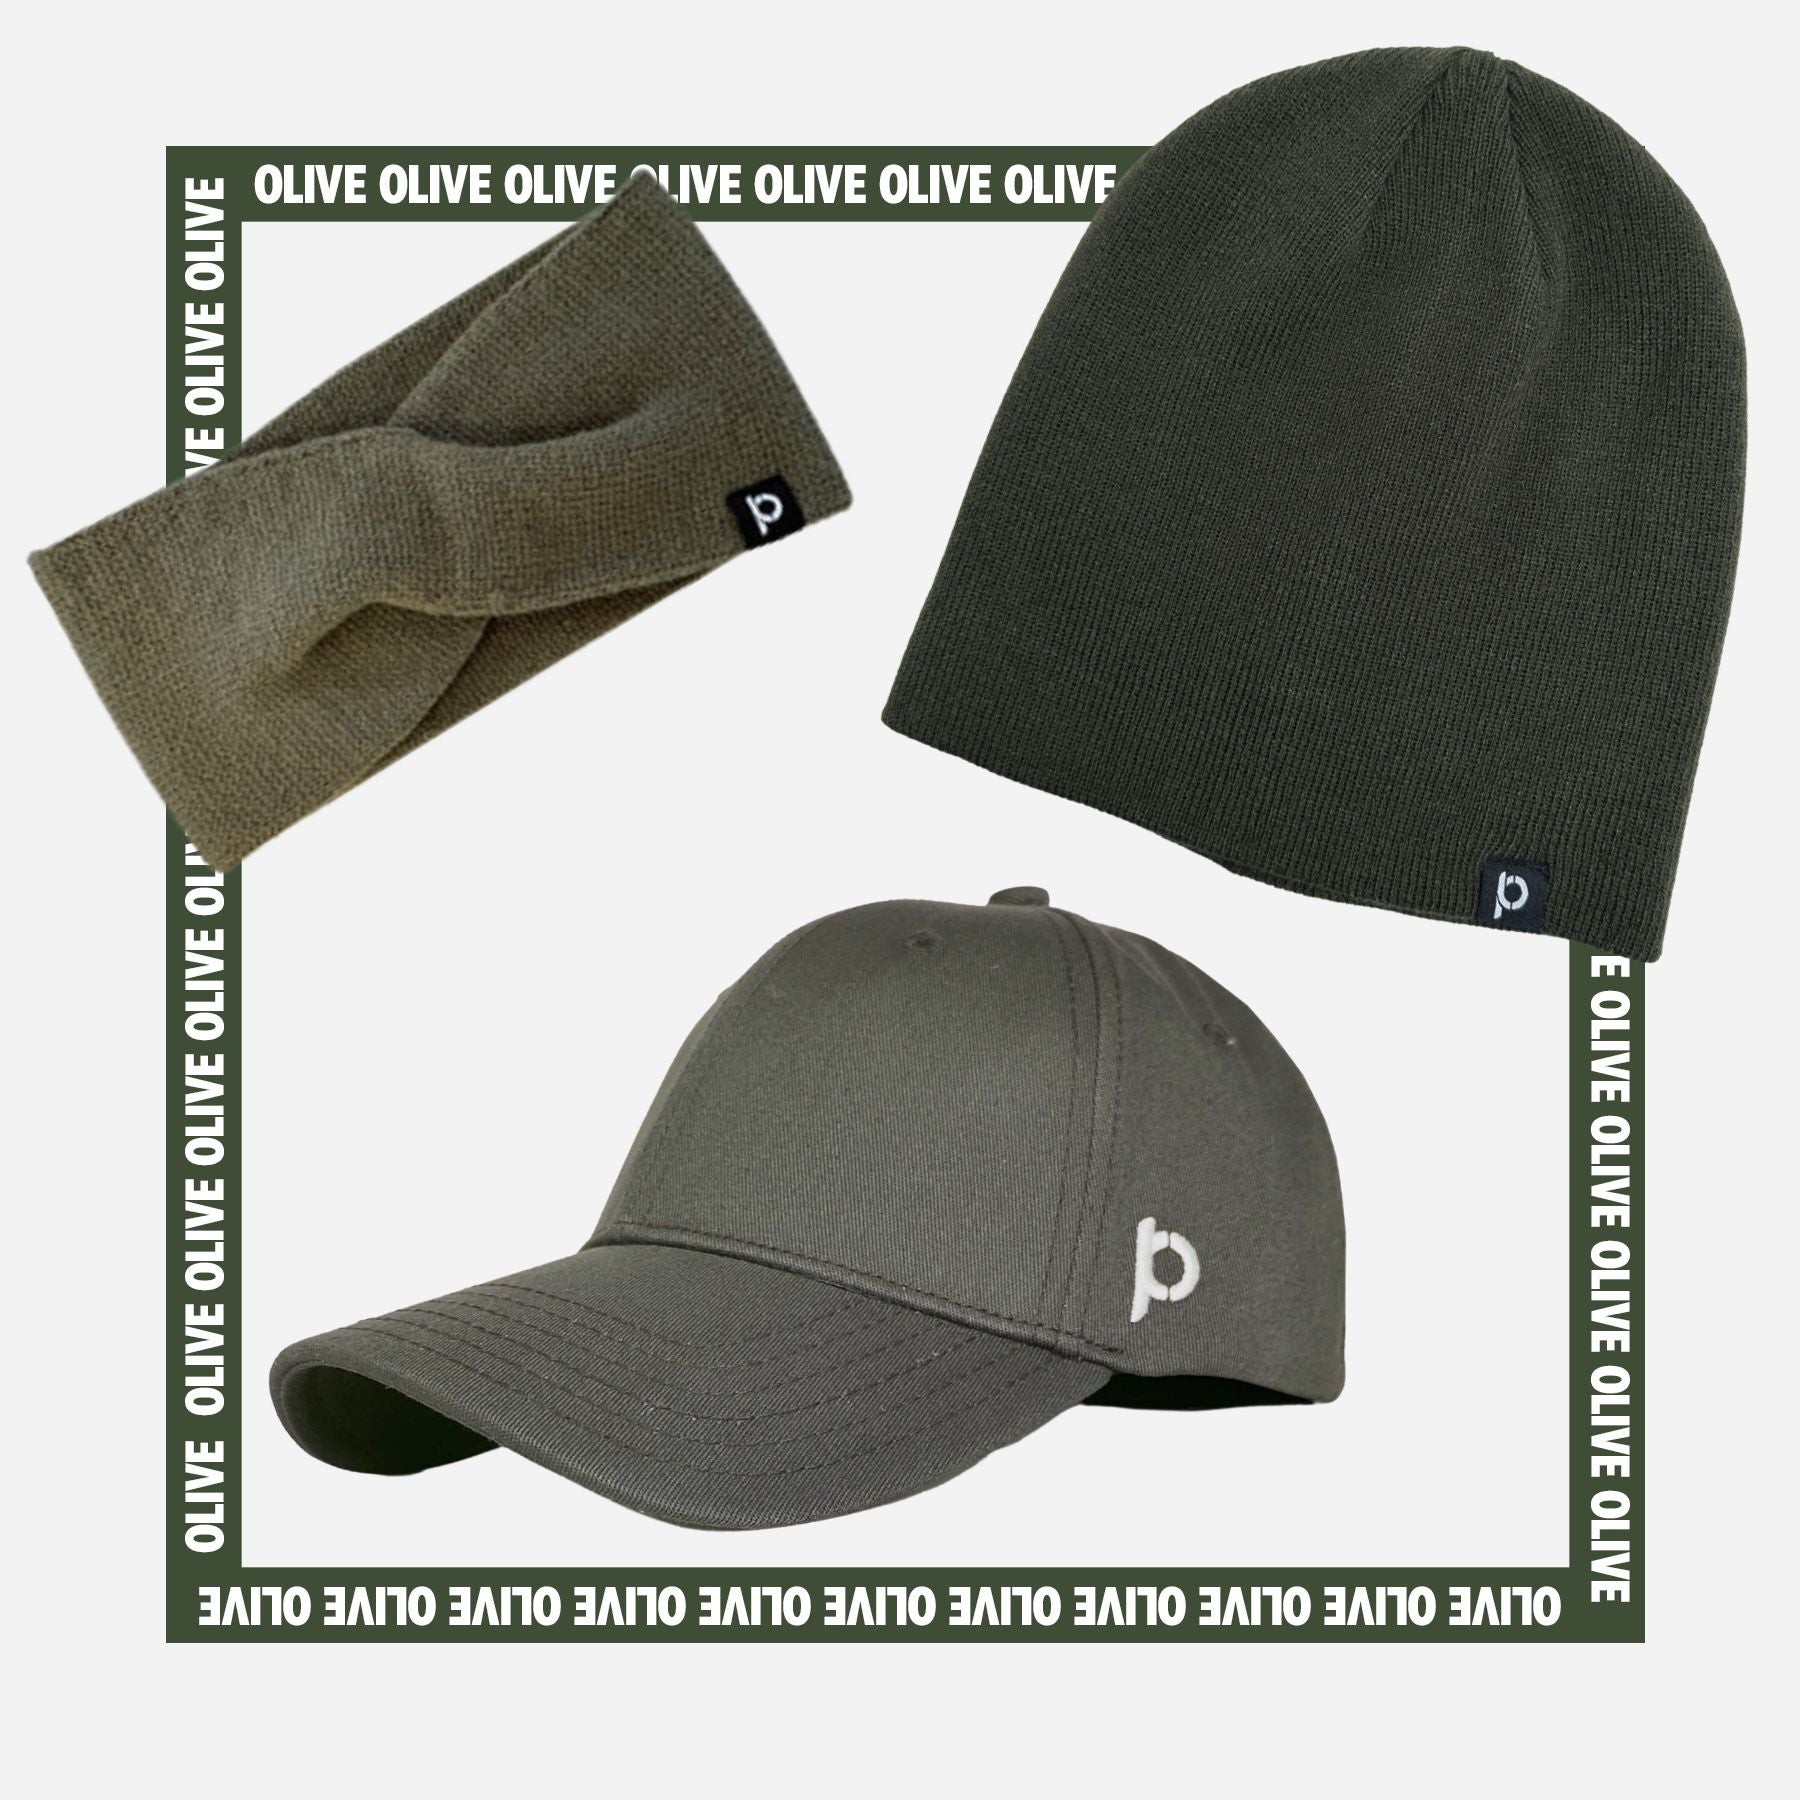 Ponyback Olive bundle with an olive beanie, headband, and baseball hat